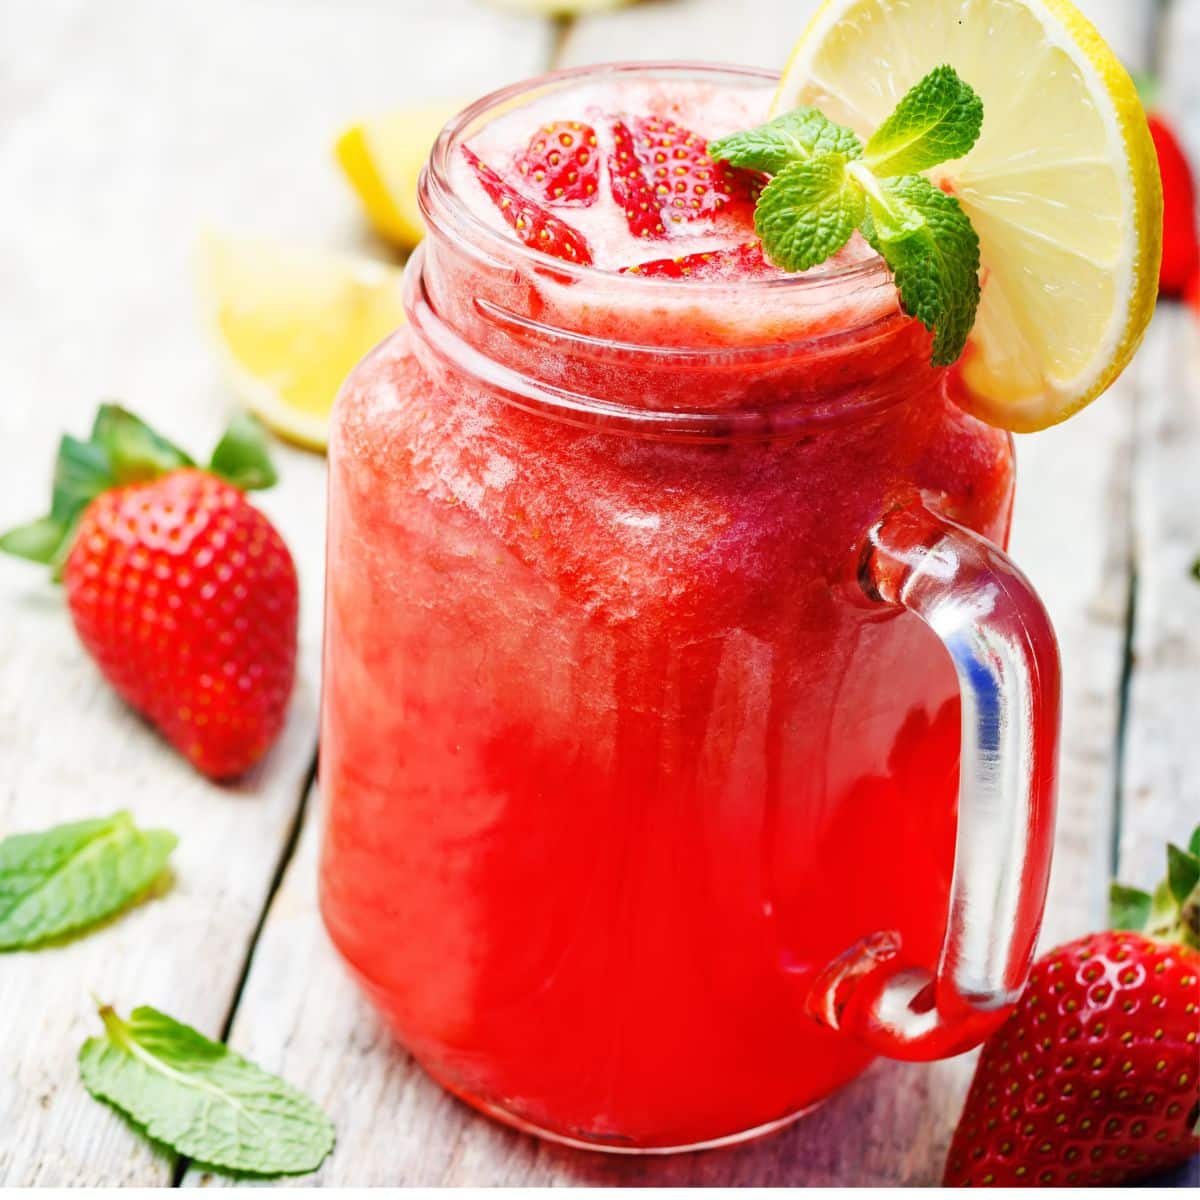 Mason jar glass filled with fresh strawberry lemonade.